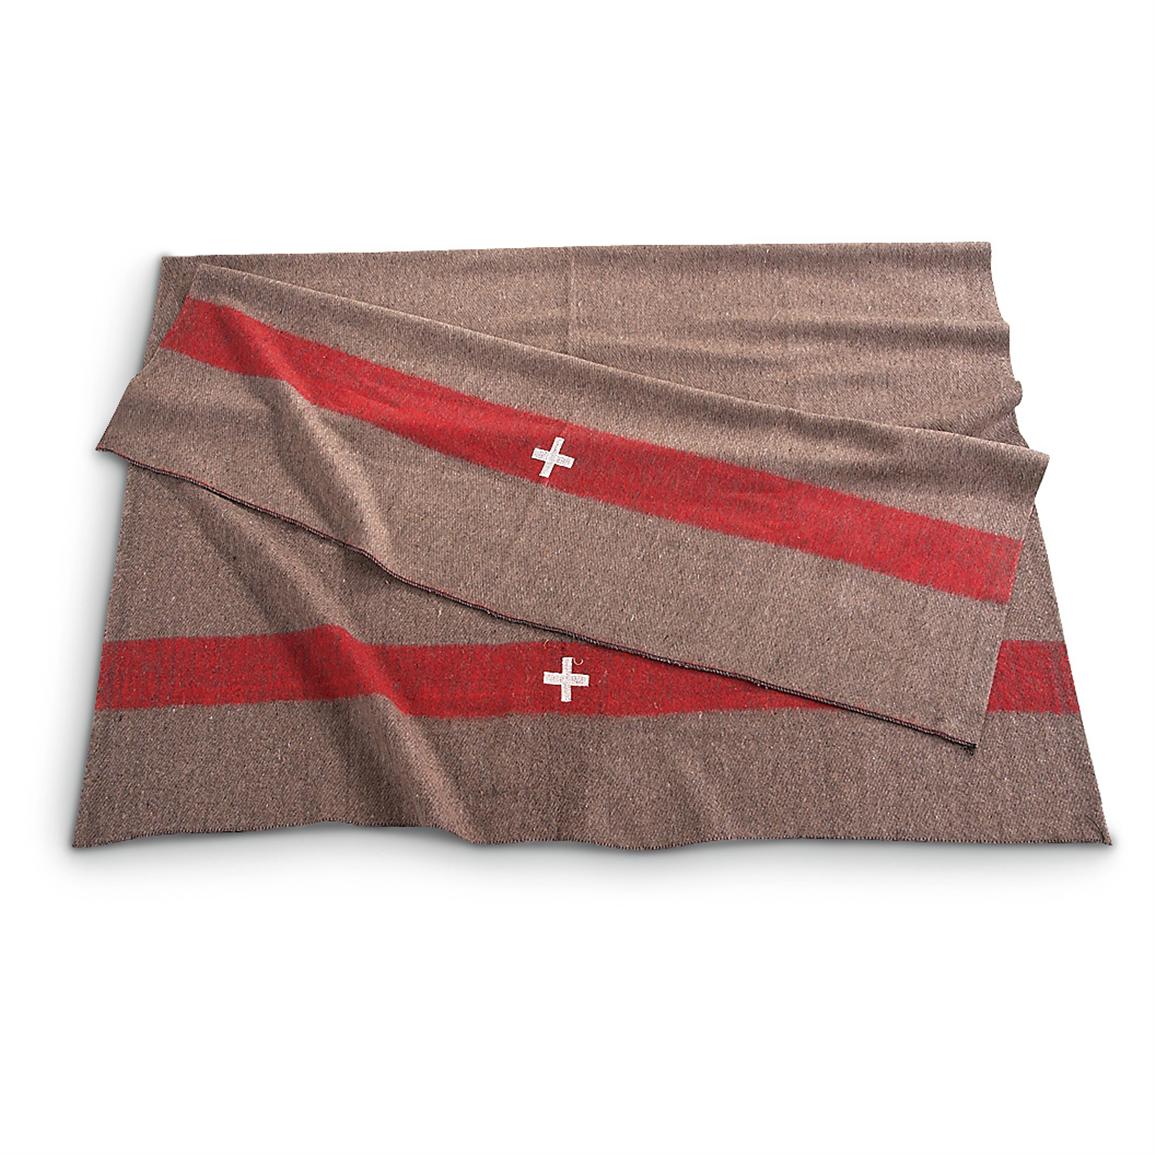 Swiss Army Style Wool Blanket, New